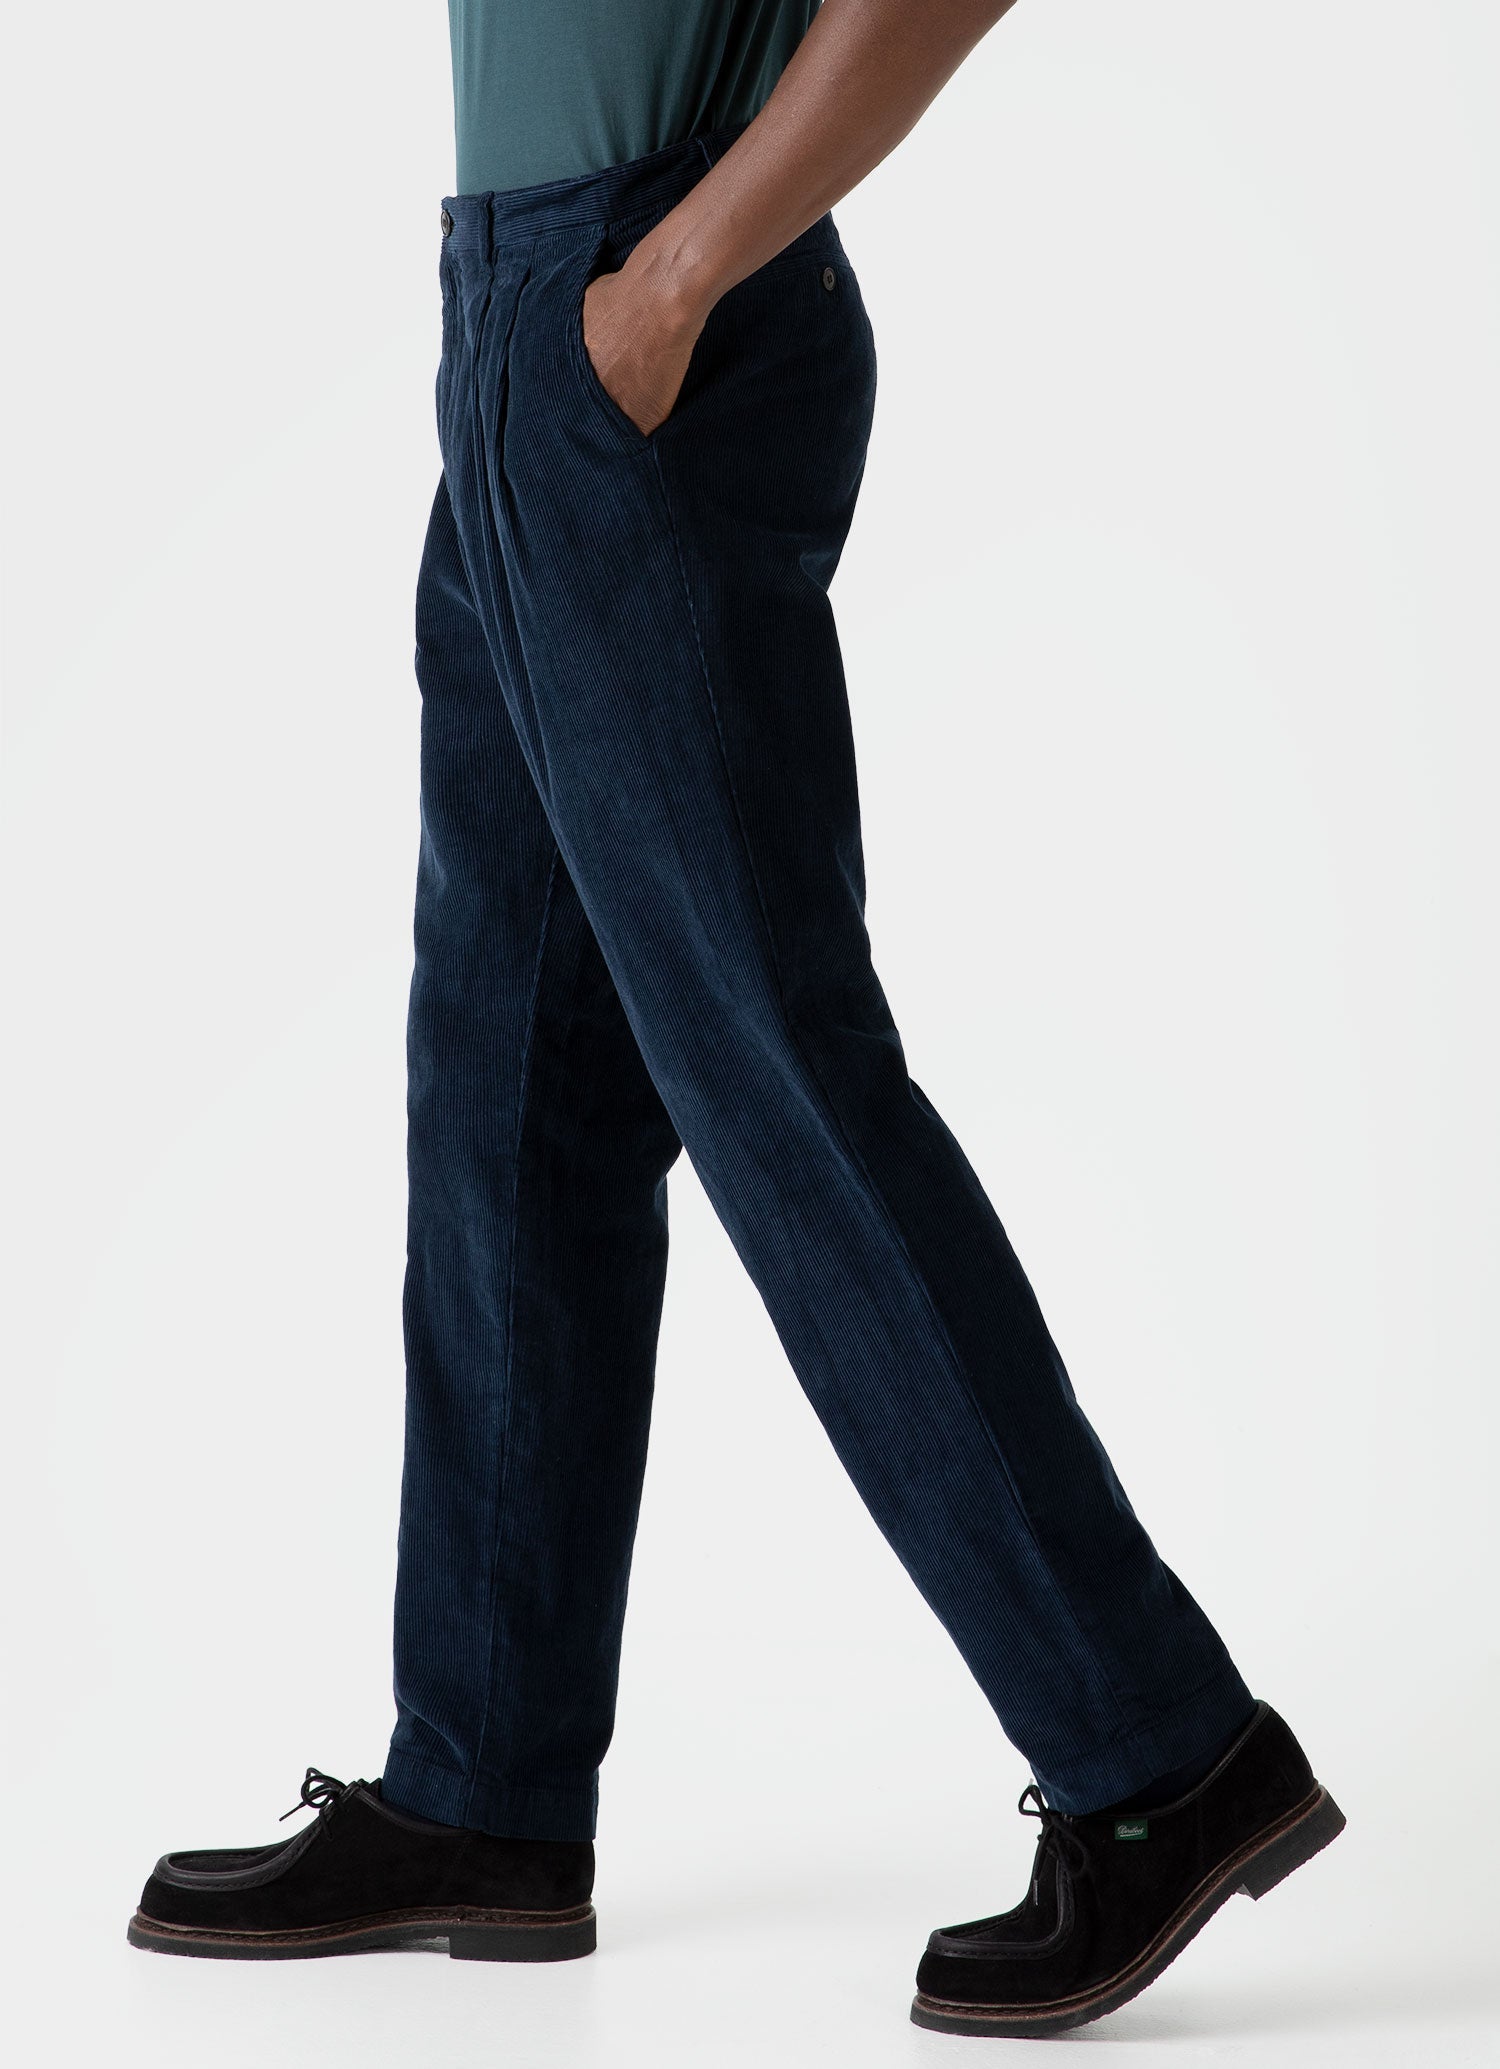 Yohji Yamamoto POUR HOMME Cotton Corduroy Pants (Trousers) Navy S | PLAYFUL